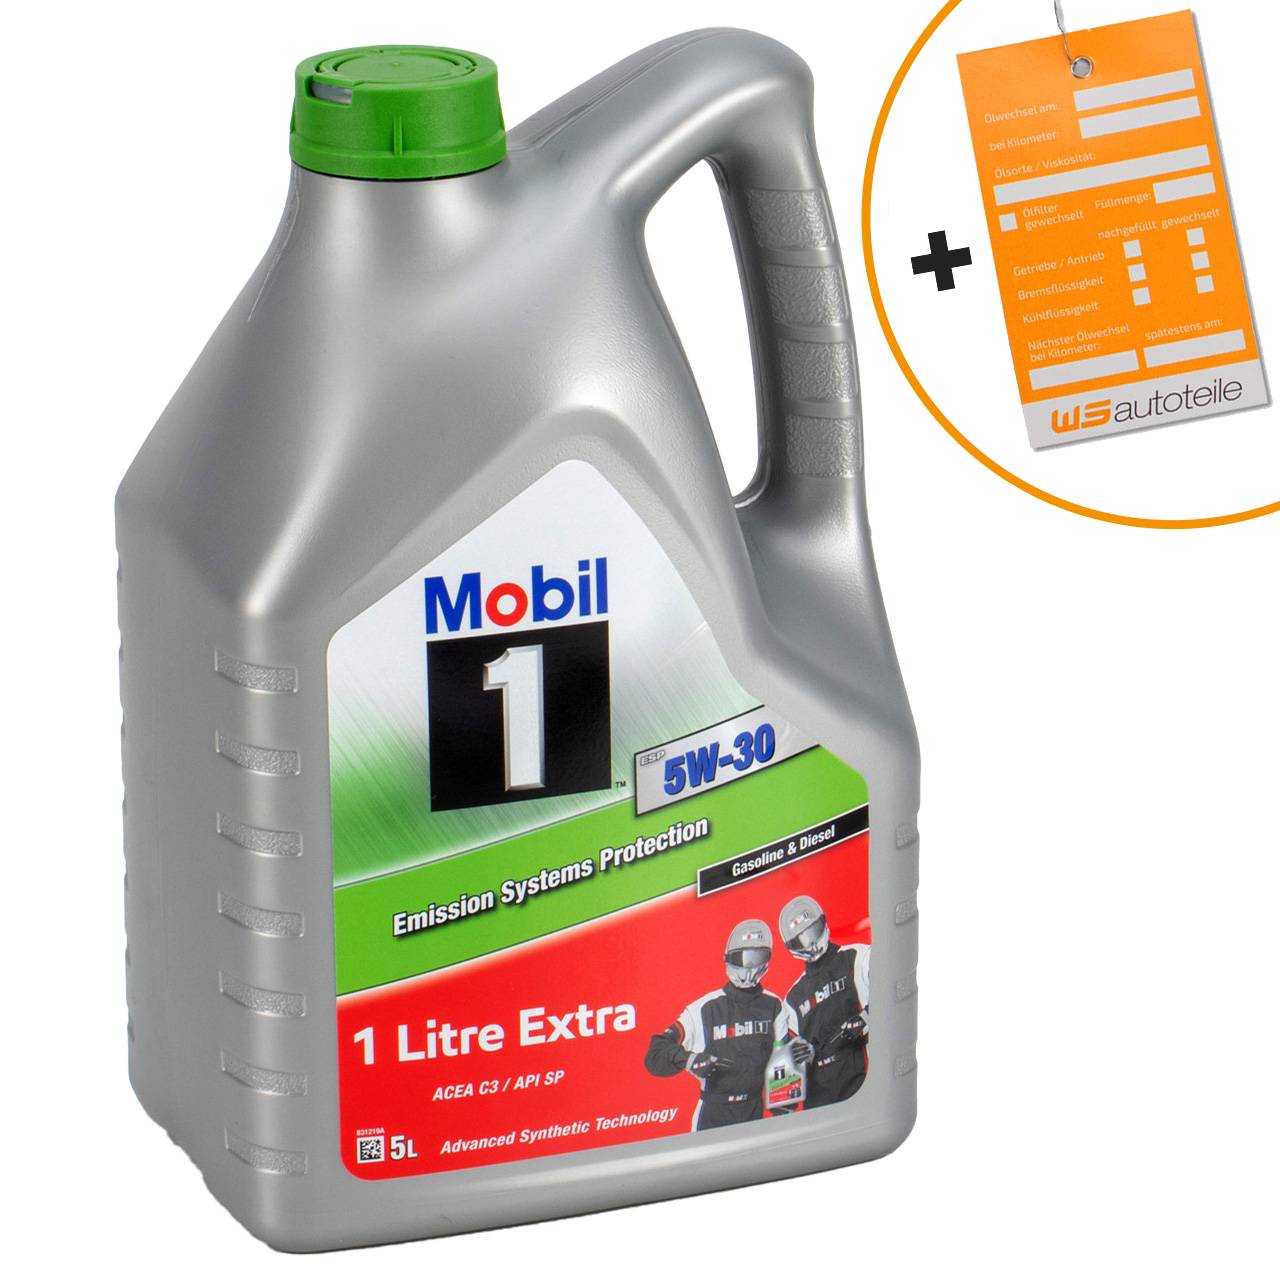 5 Liter Öl LOTOS Semisyntetic 10W40 Motoröl Motoroel Motoroil Mercedes VW  Seat - Flex-Autoteile